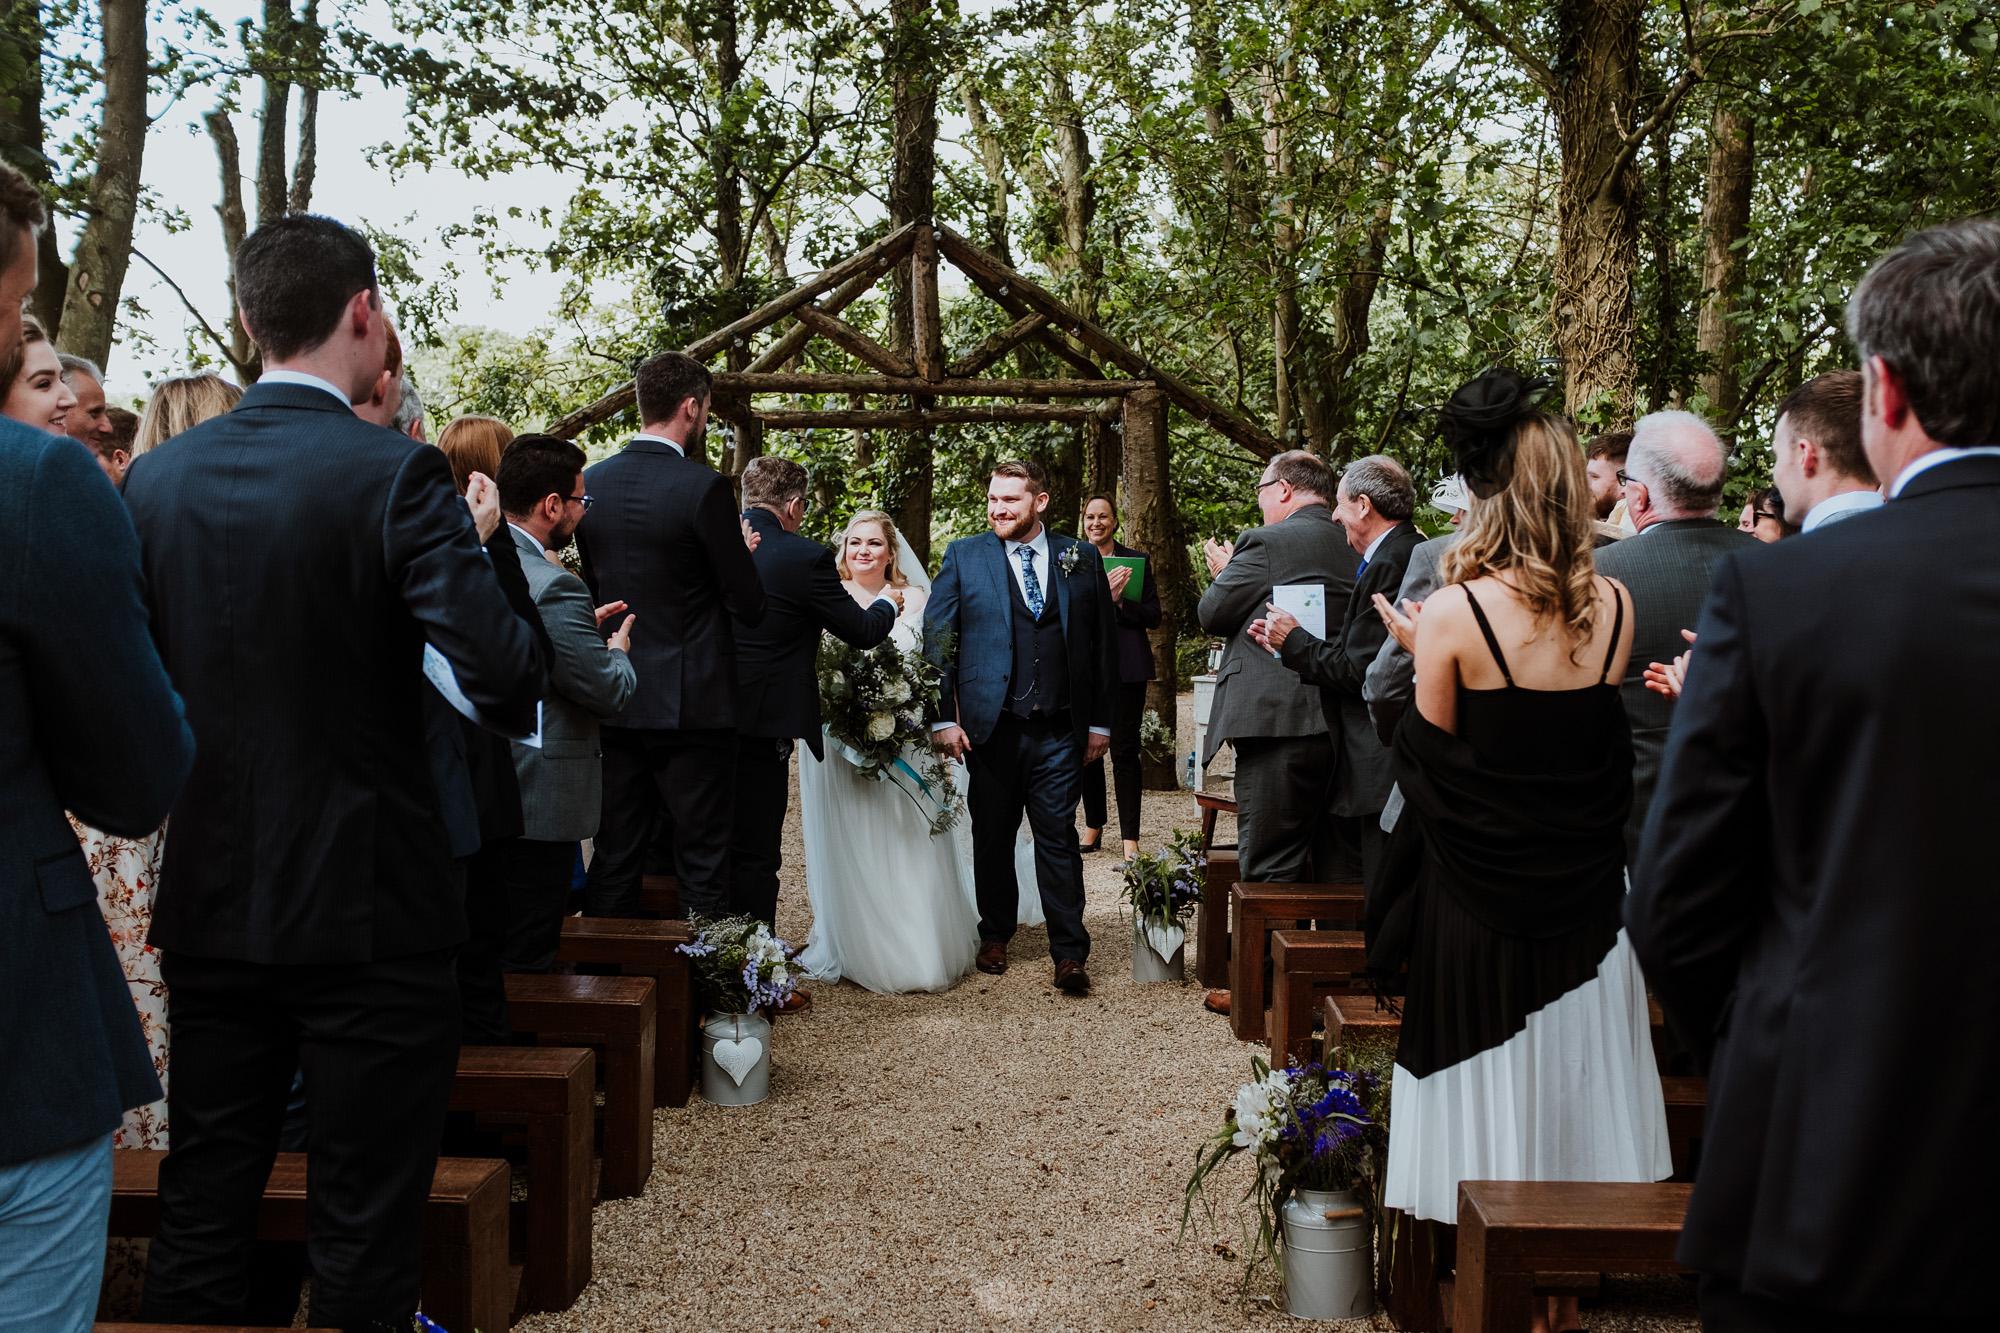 segrave-barns-house-wedding-outdoor-ceremony